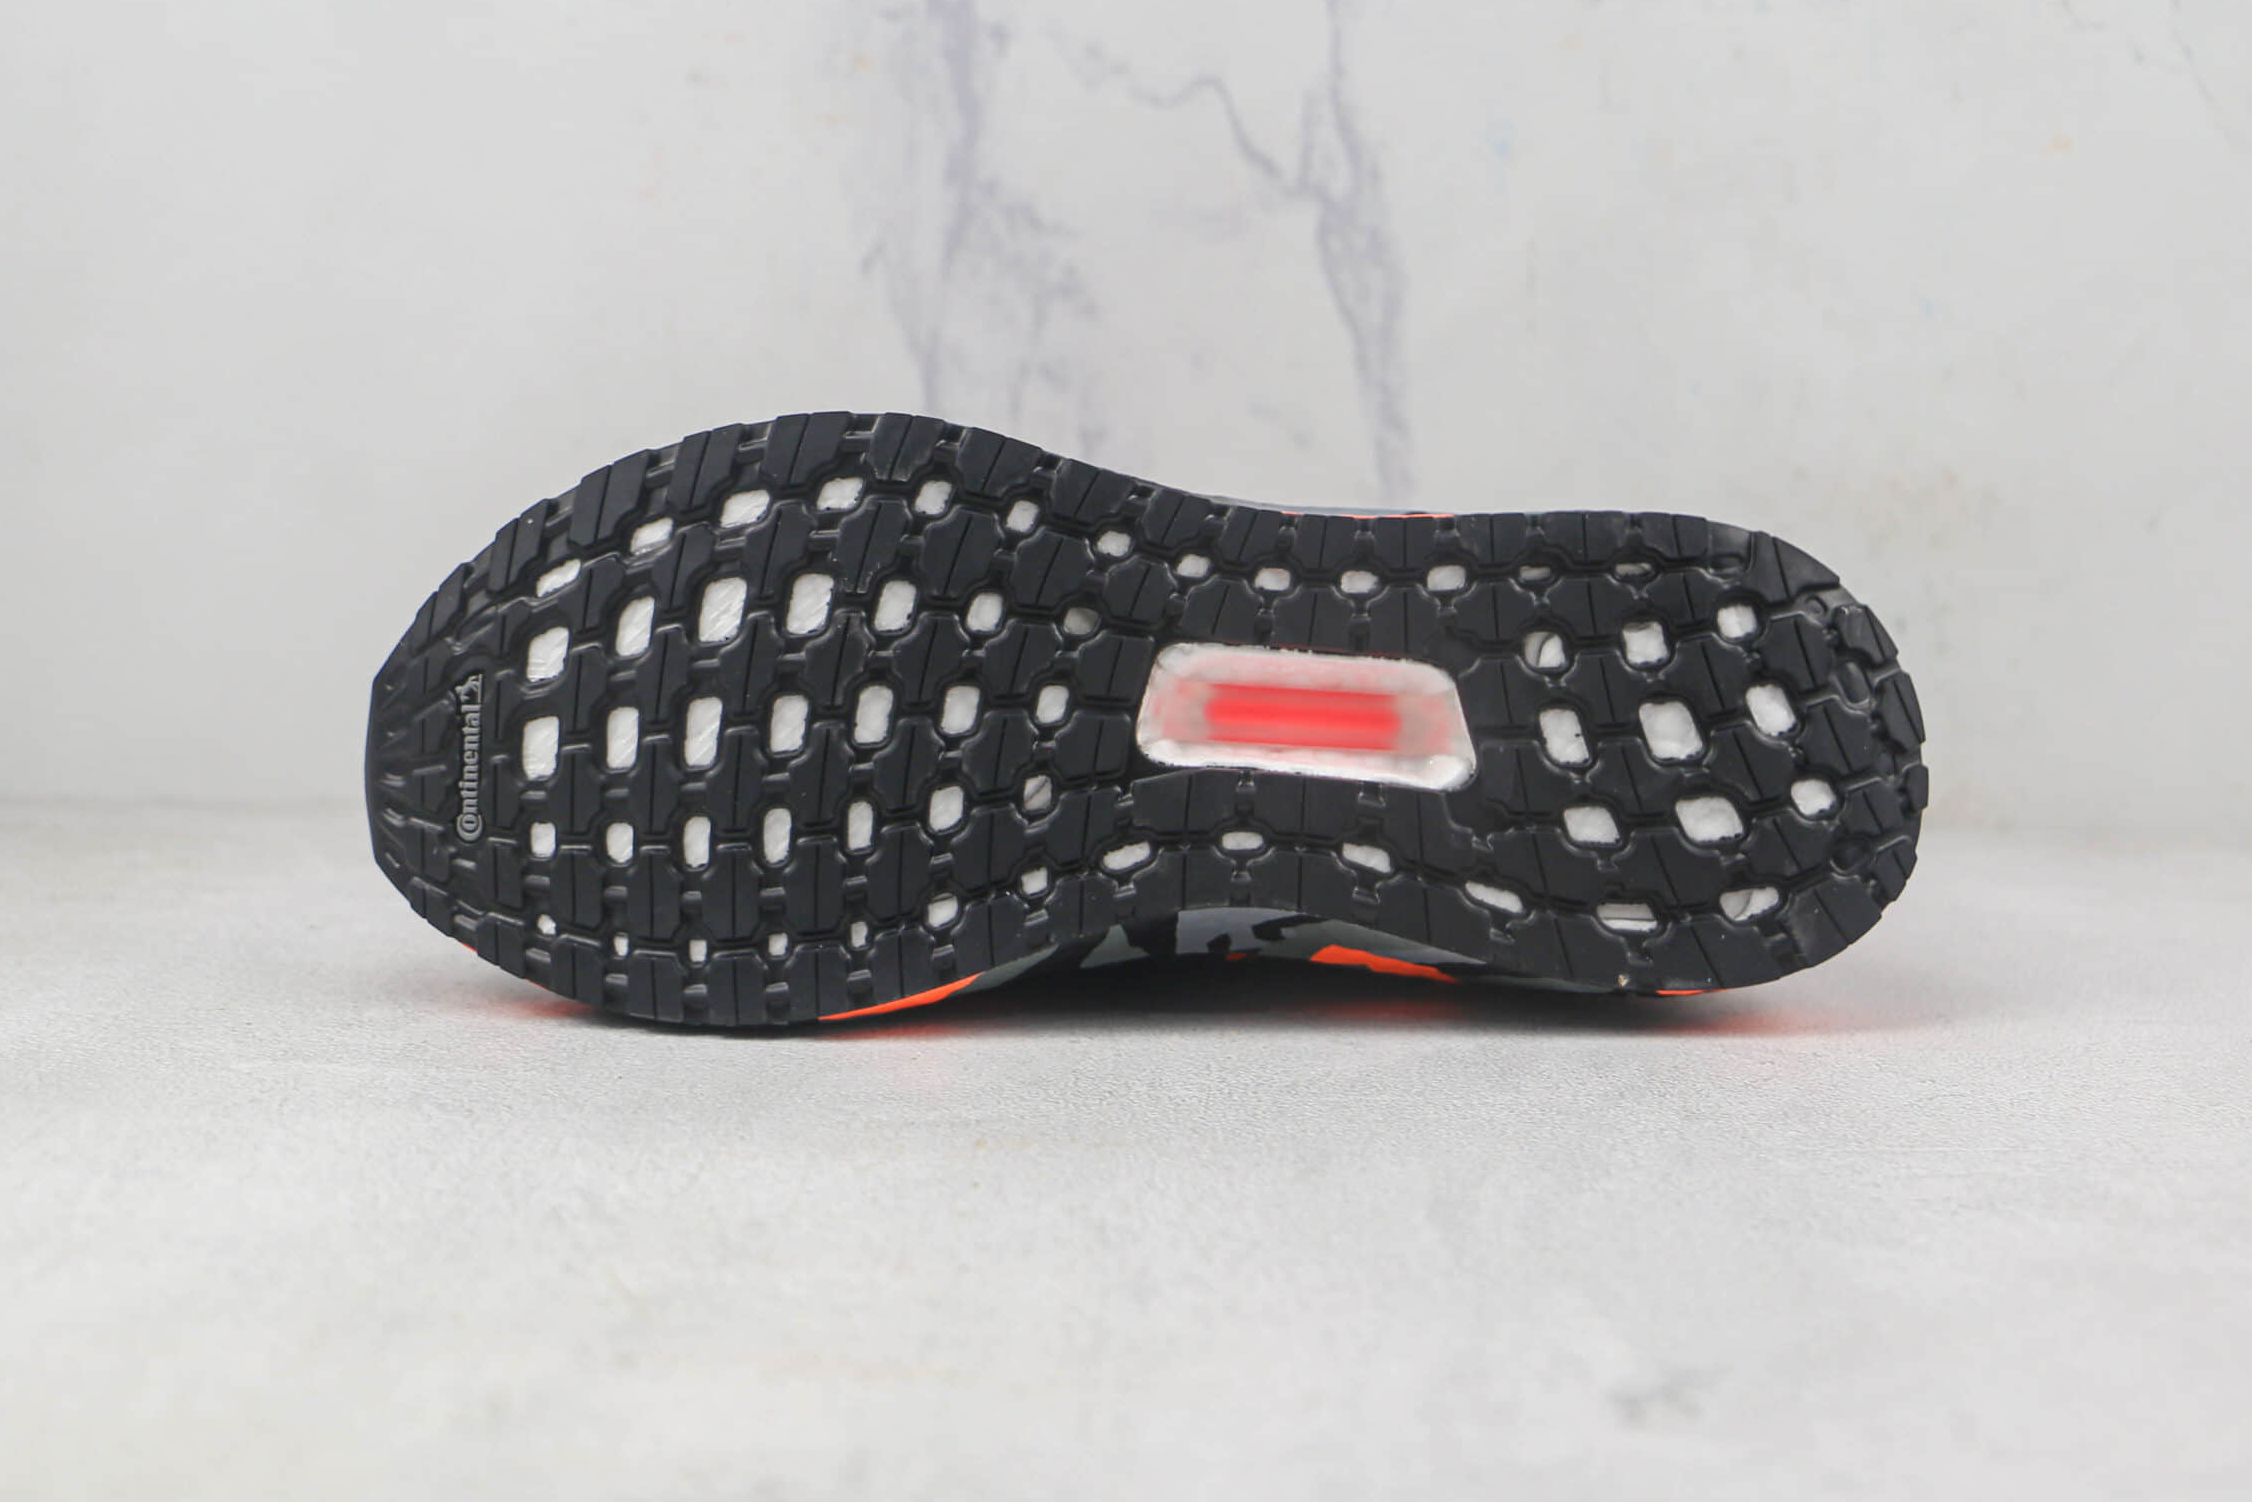 Adidas UltraBoost 20 Geometric Pack - Black Signal Orange | FV8330